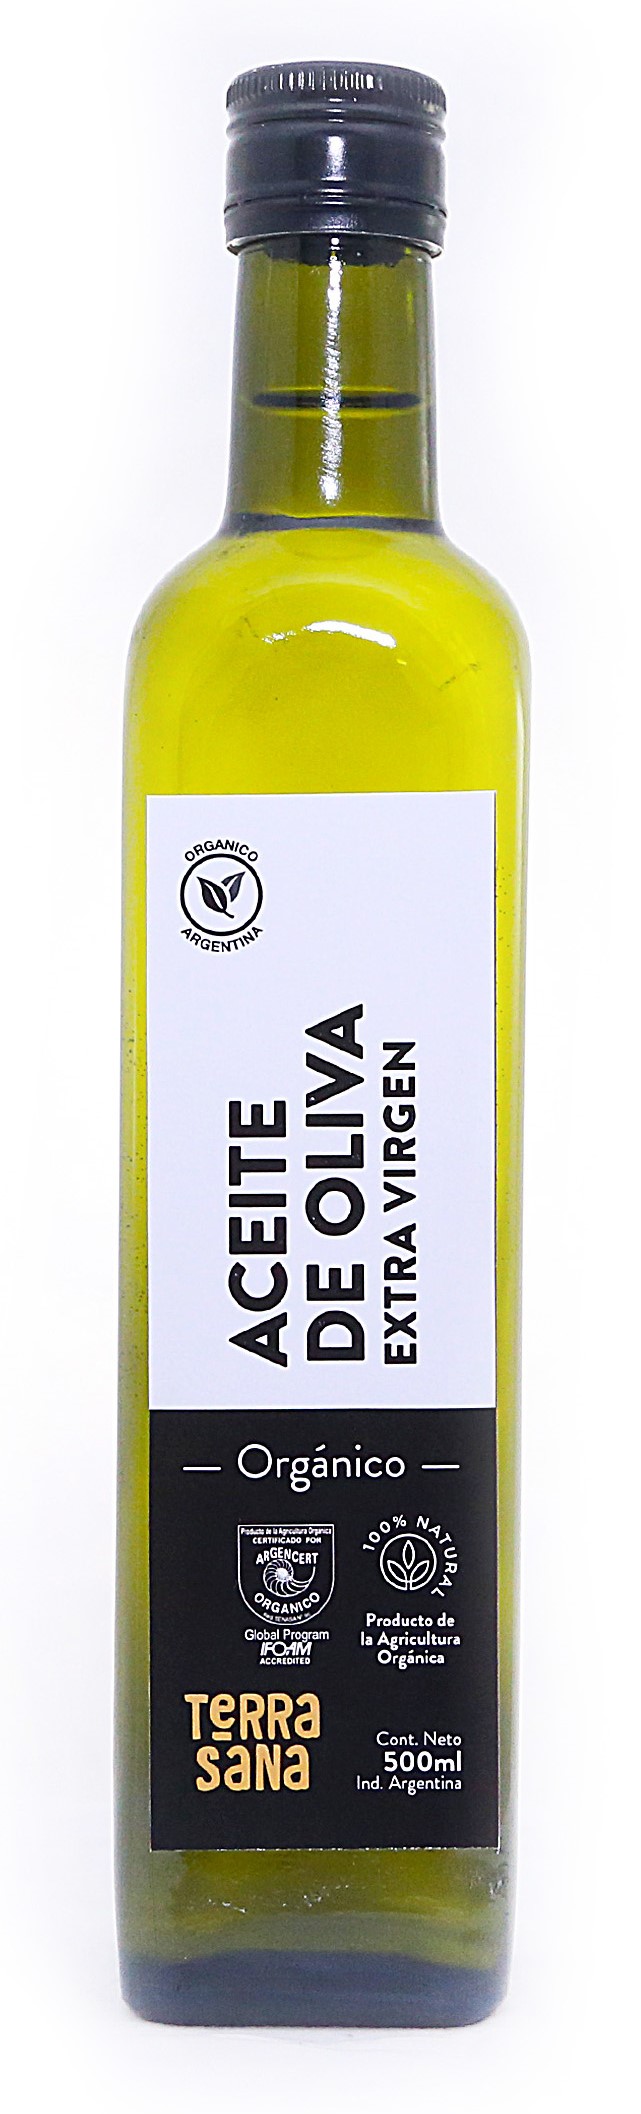 Aceite de oliva extra virgen